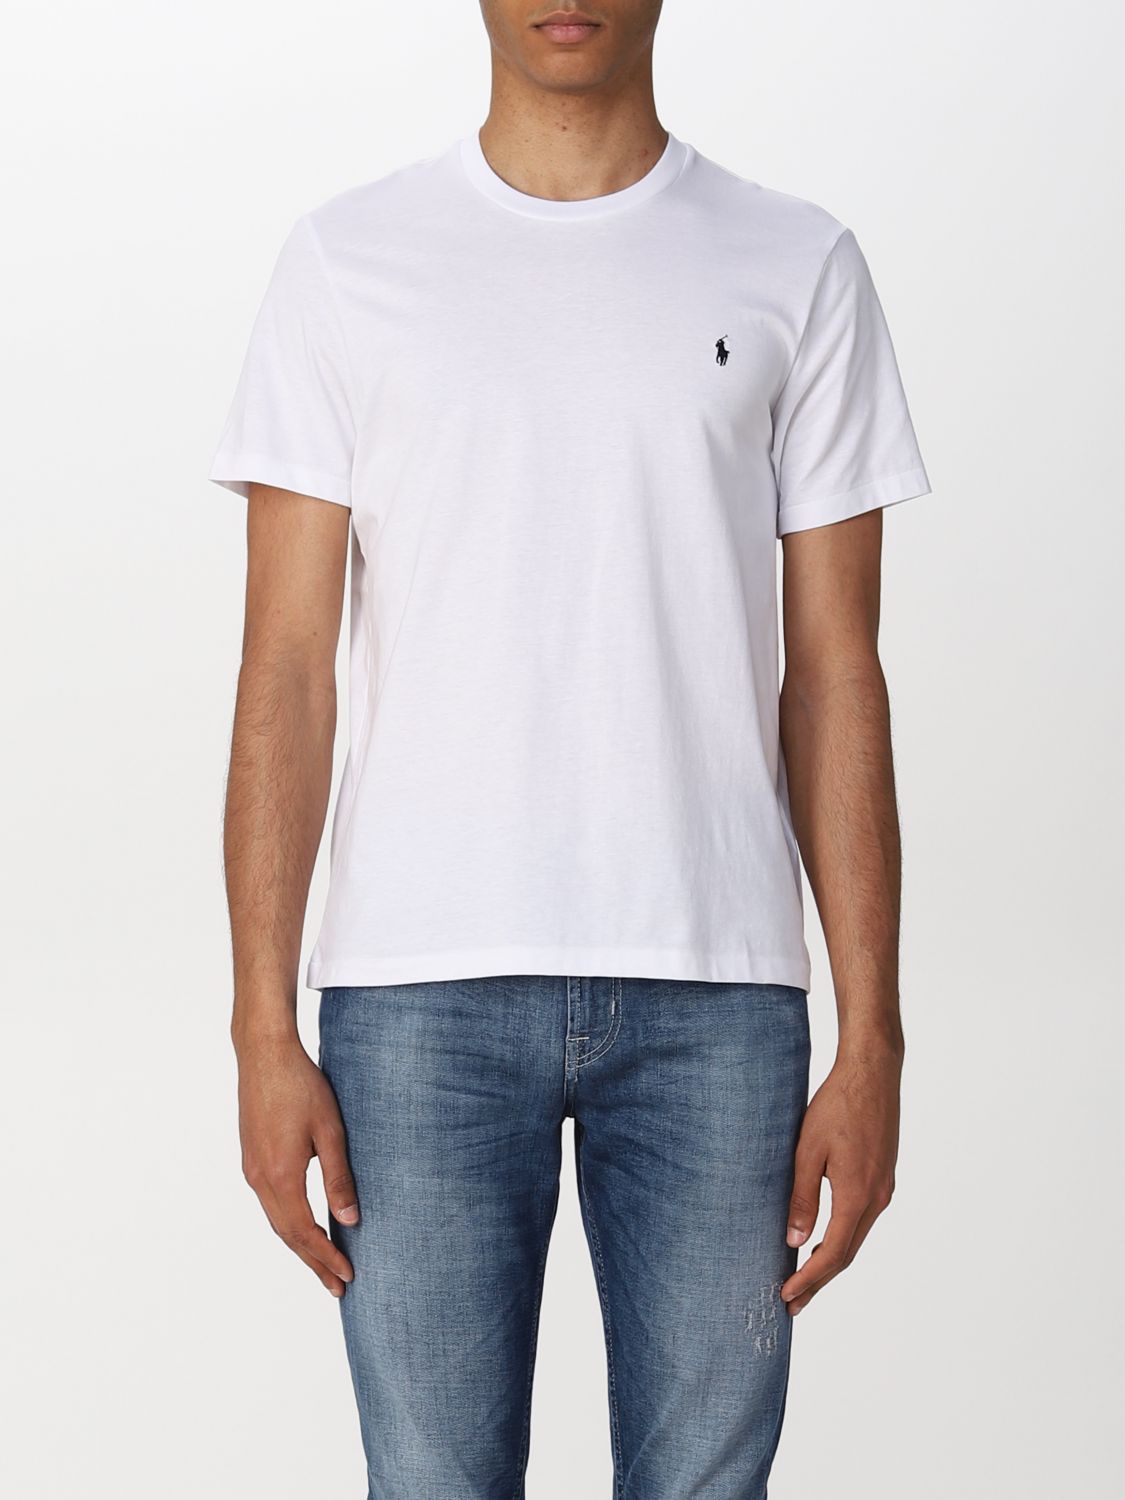 POLO RALPH LAUREN: cotton t-shirt with logo - White | Polo Ralph Lauren ...